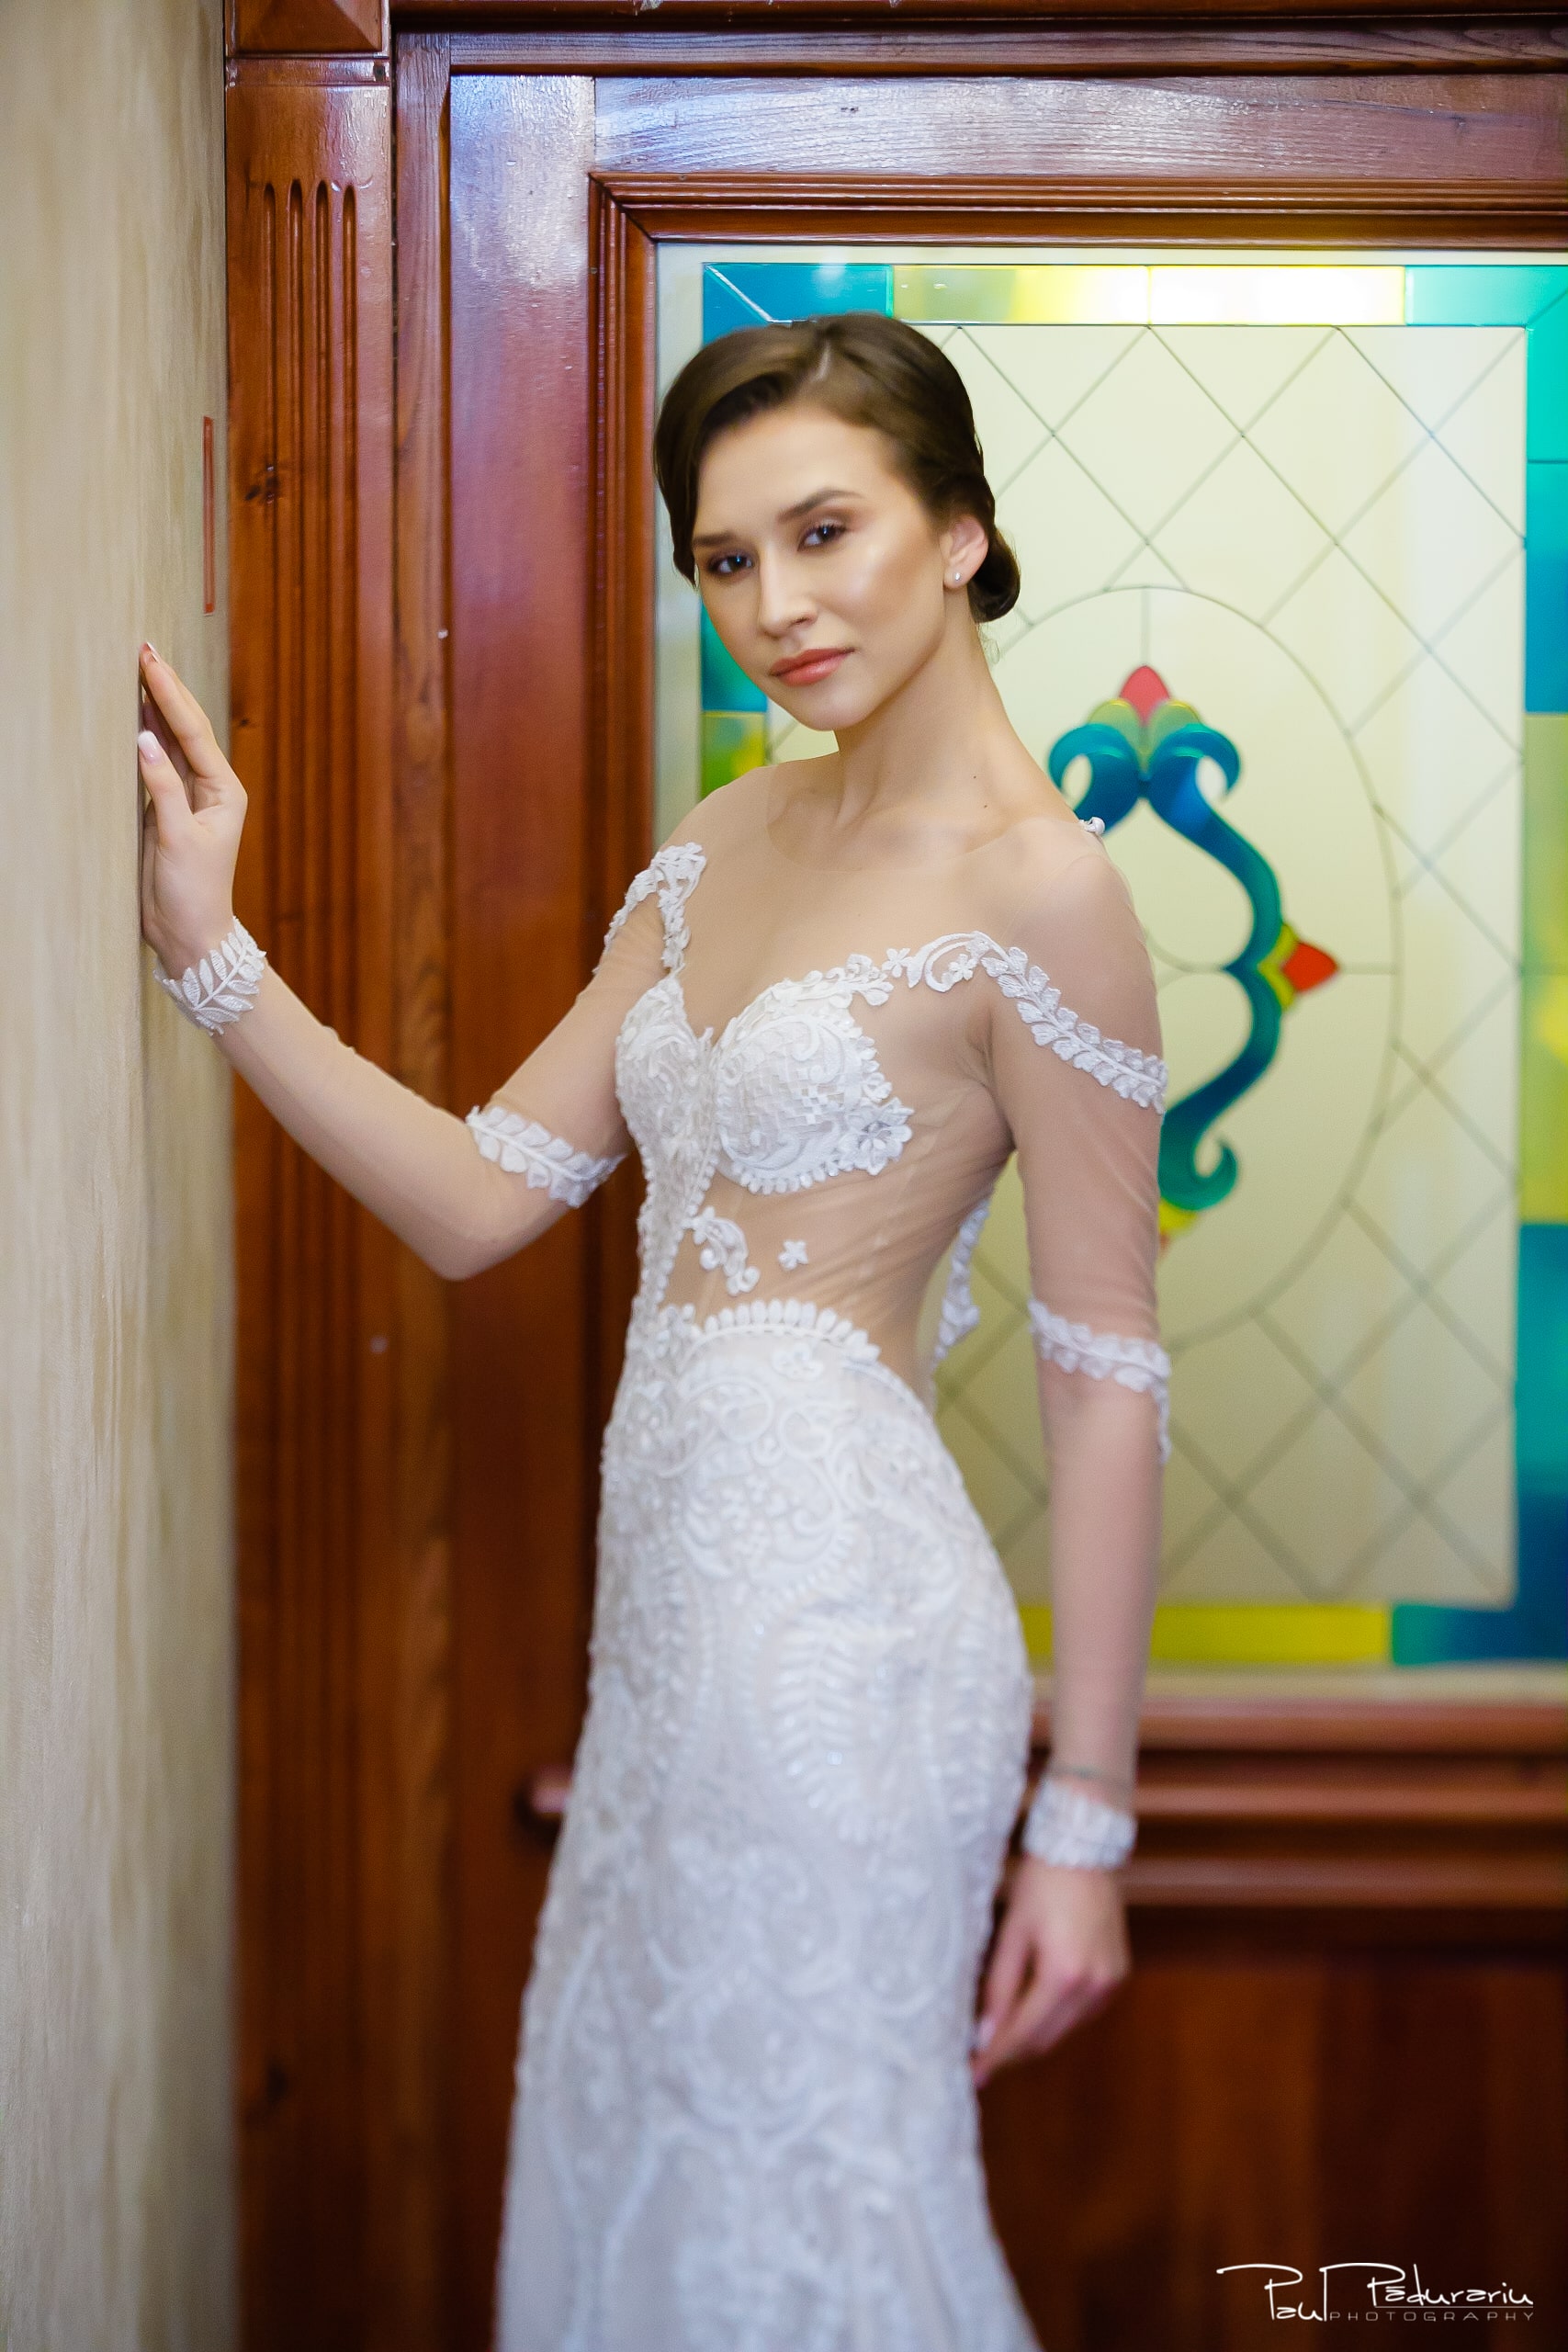 Modern Bride Edith Val colectie rochie mireasa 2019 - fotograf profesionist iasi paul padurariu | nunta iasi 10